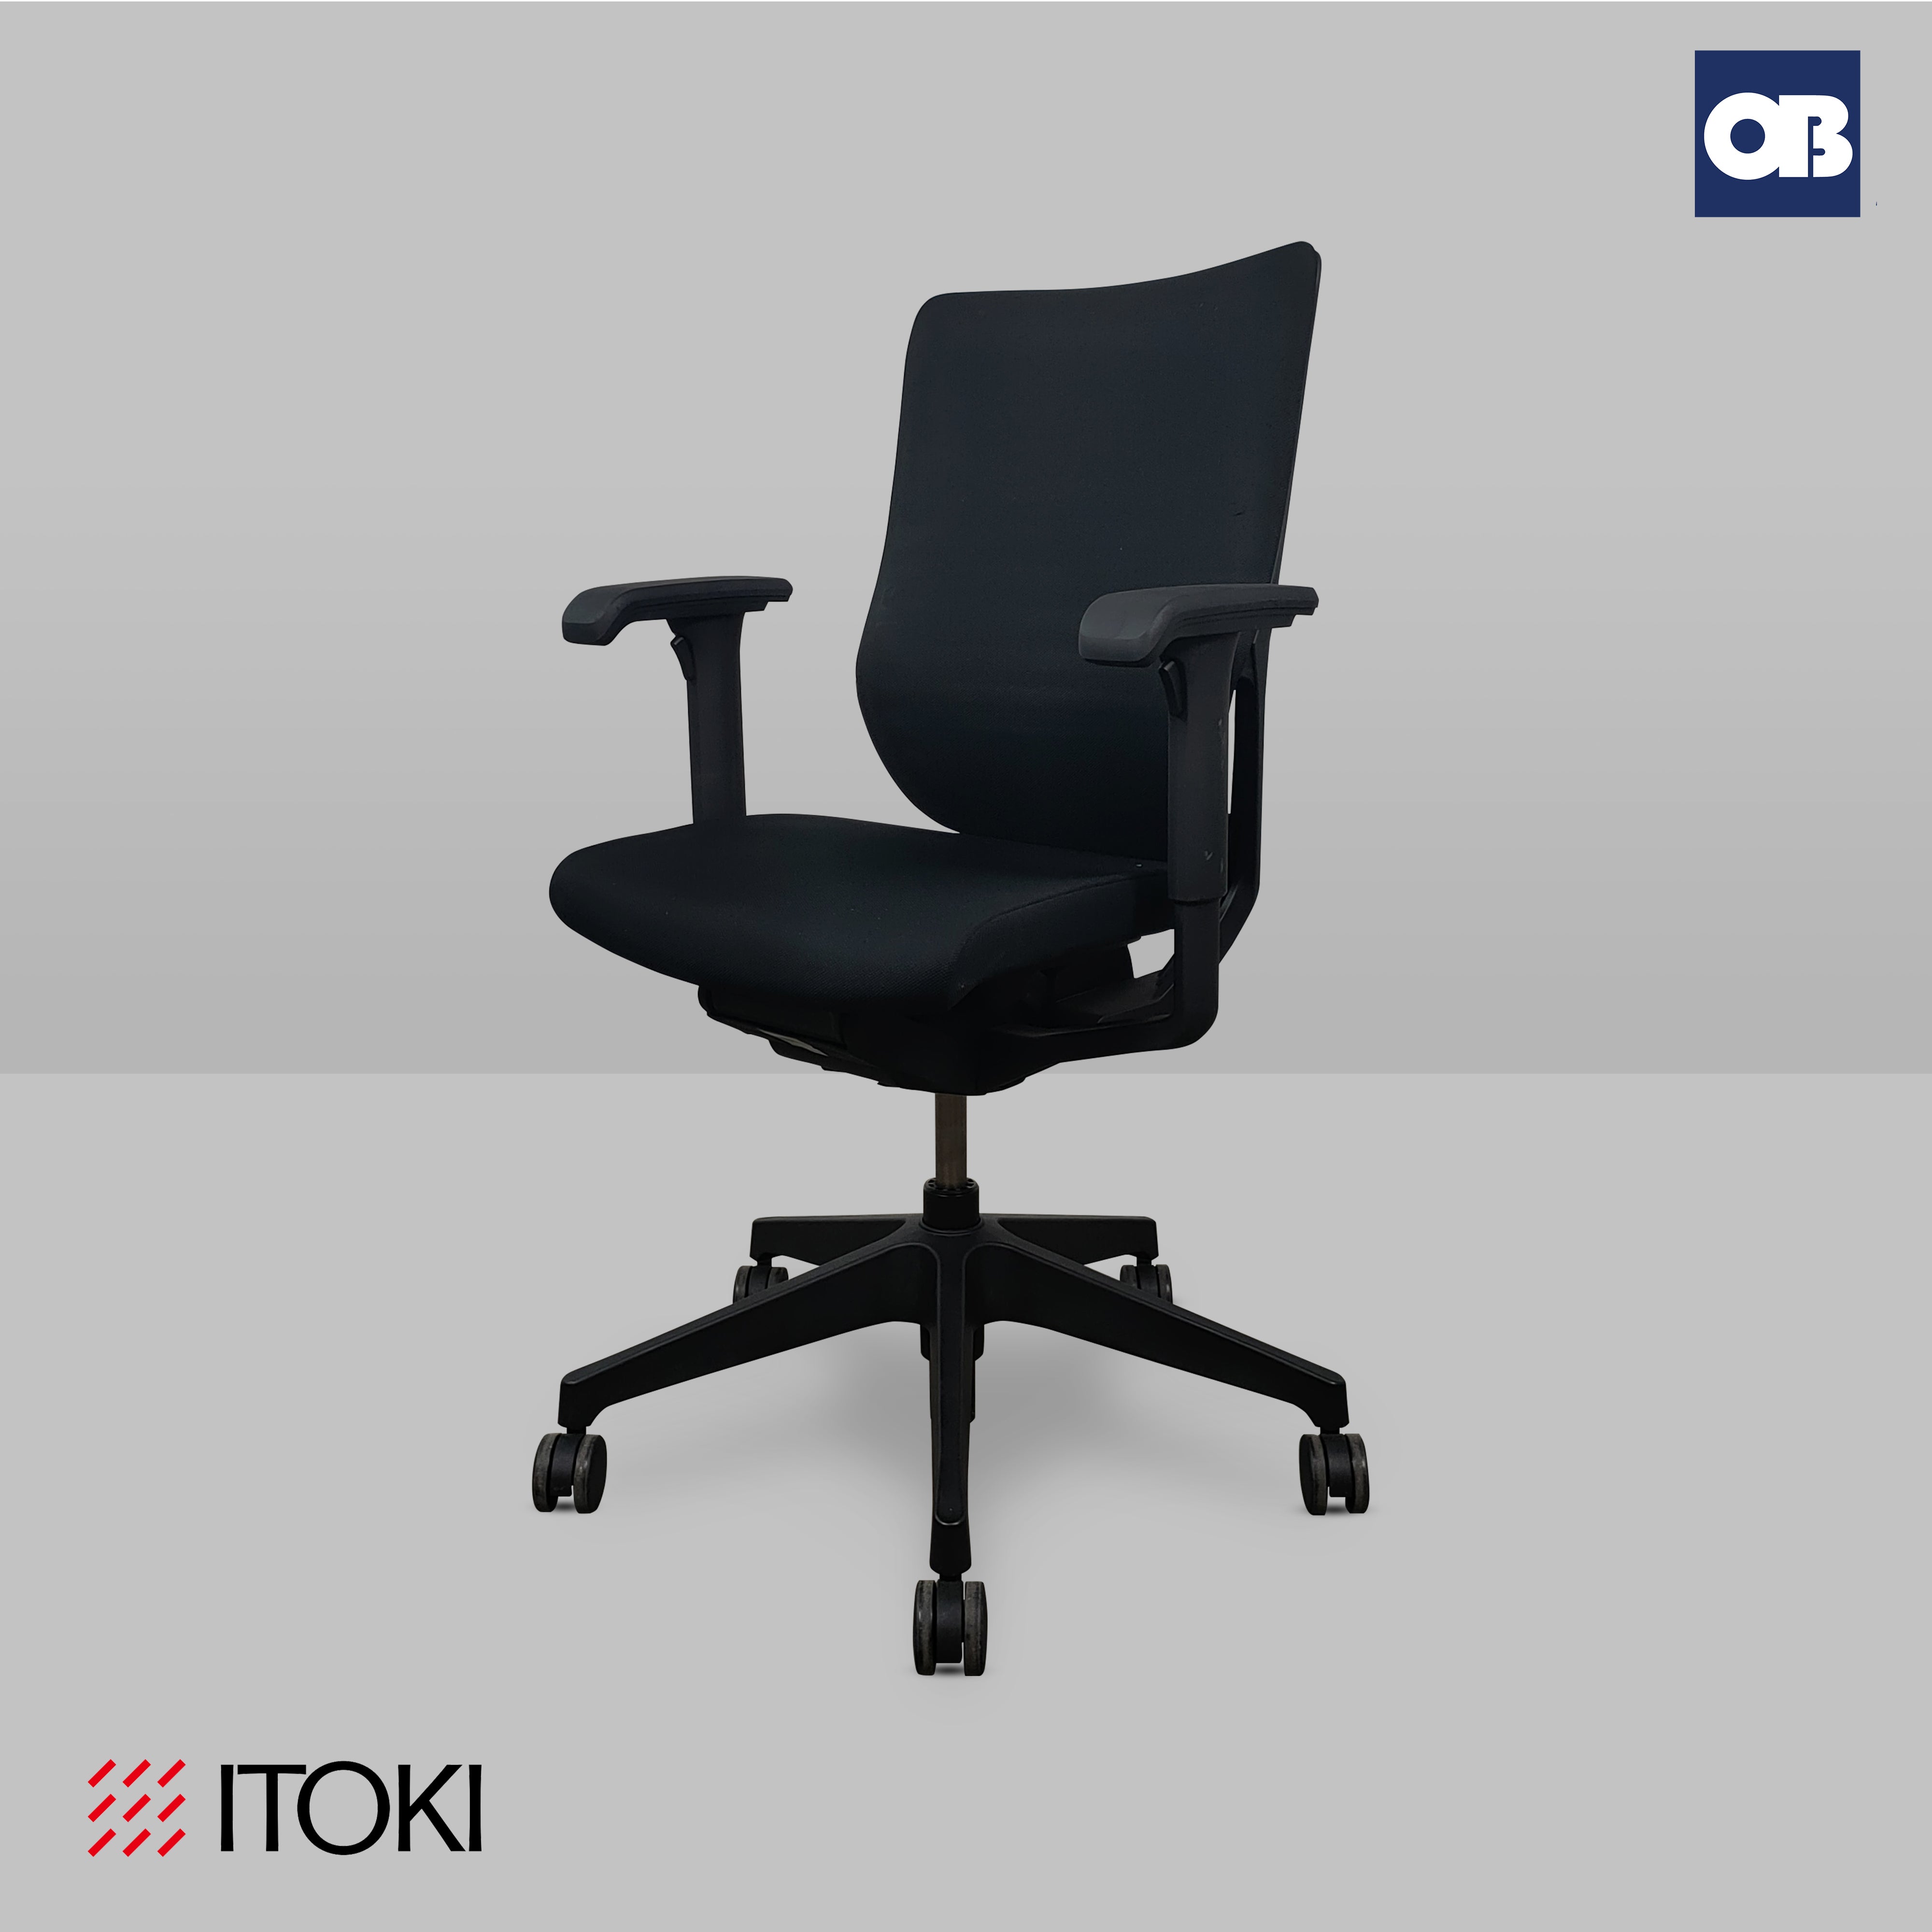 Itoki Swivel Chair